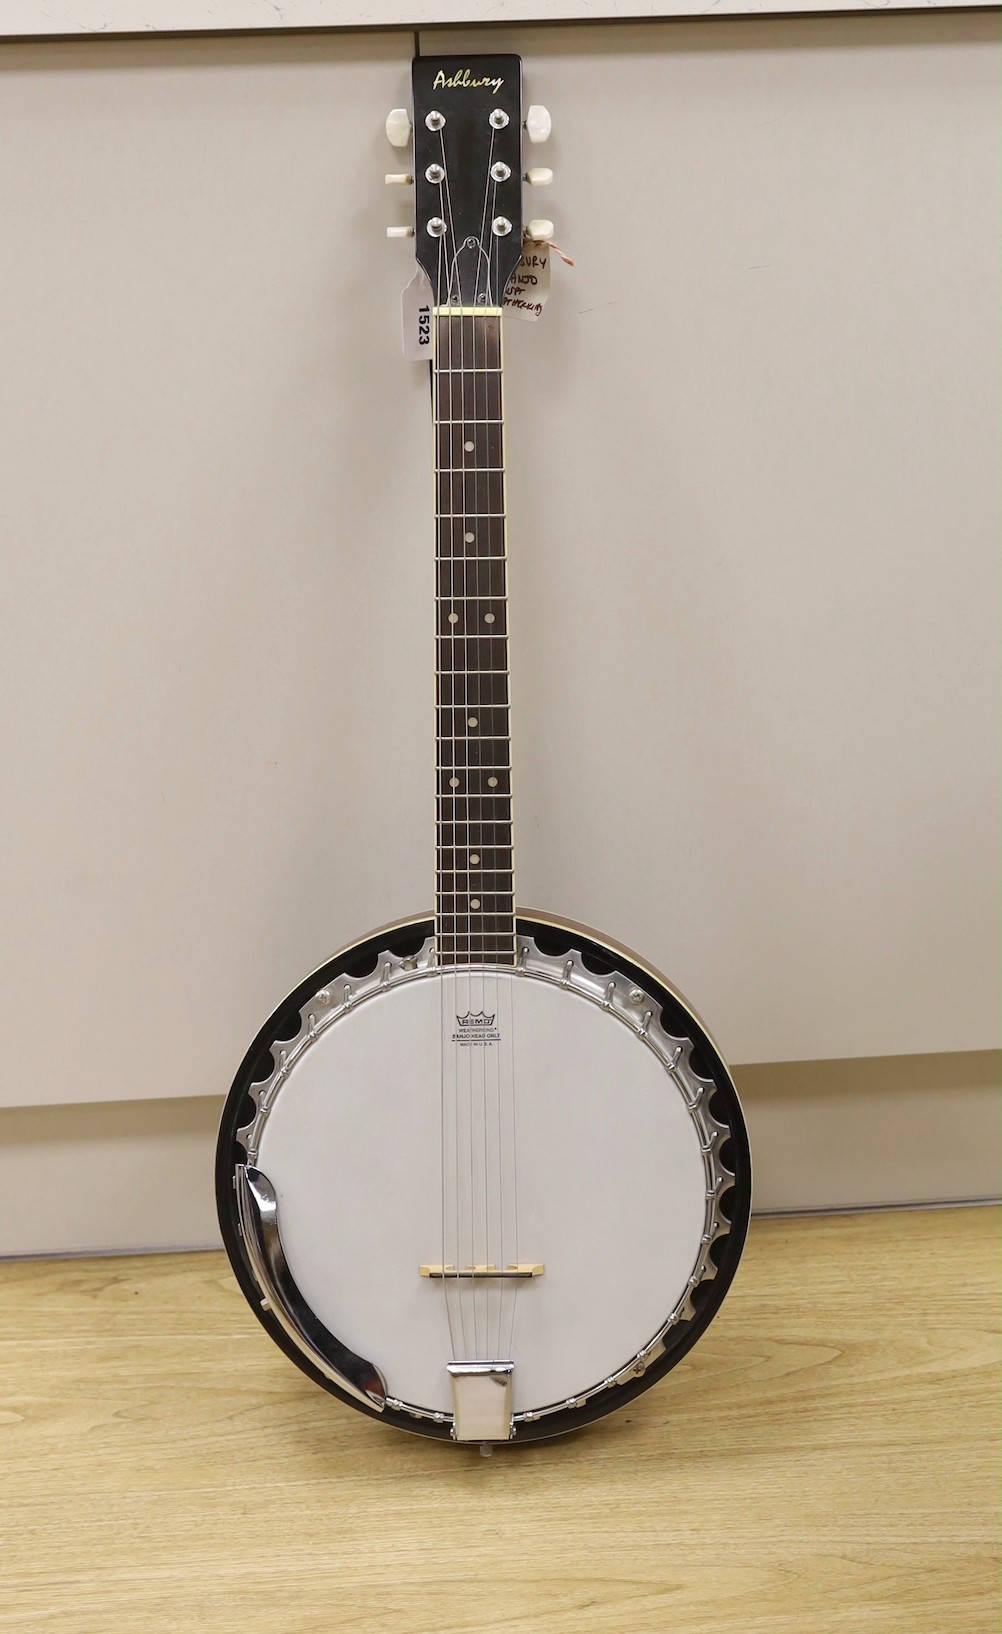 An Ashbury banjo - U.S.A. Weatherking with soft padded case, Banjo 86.5 cms high